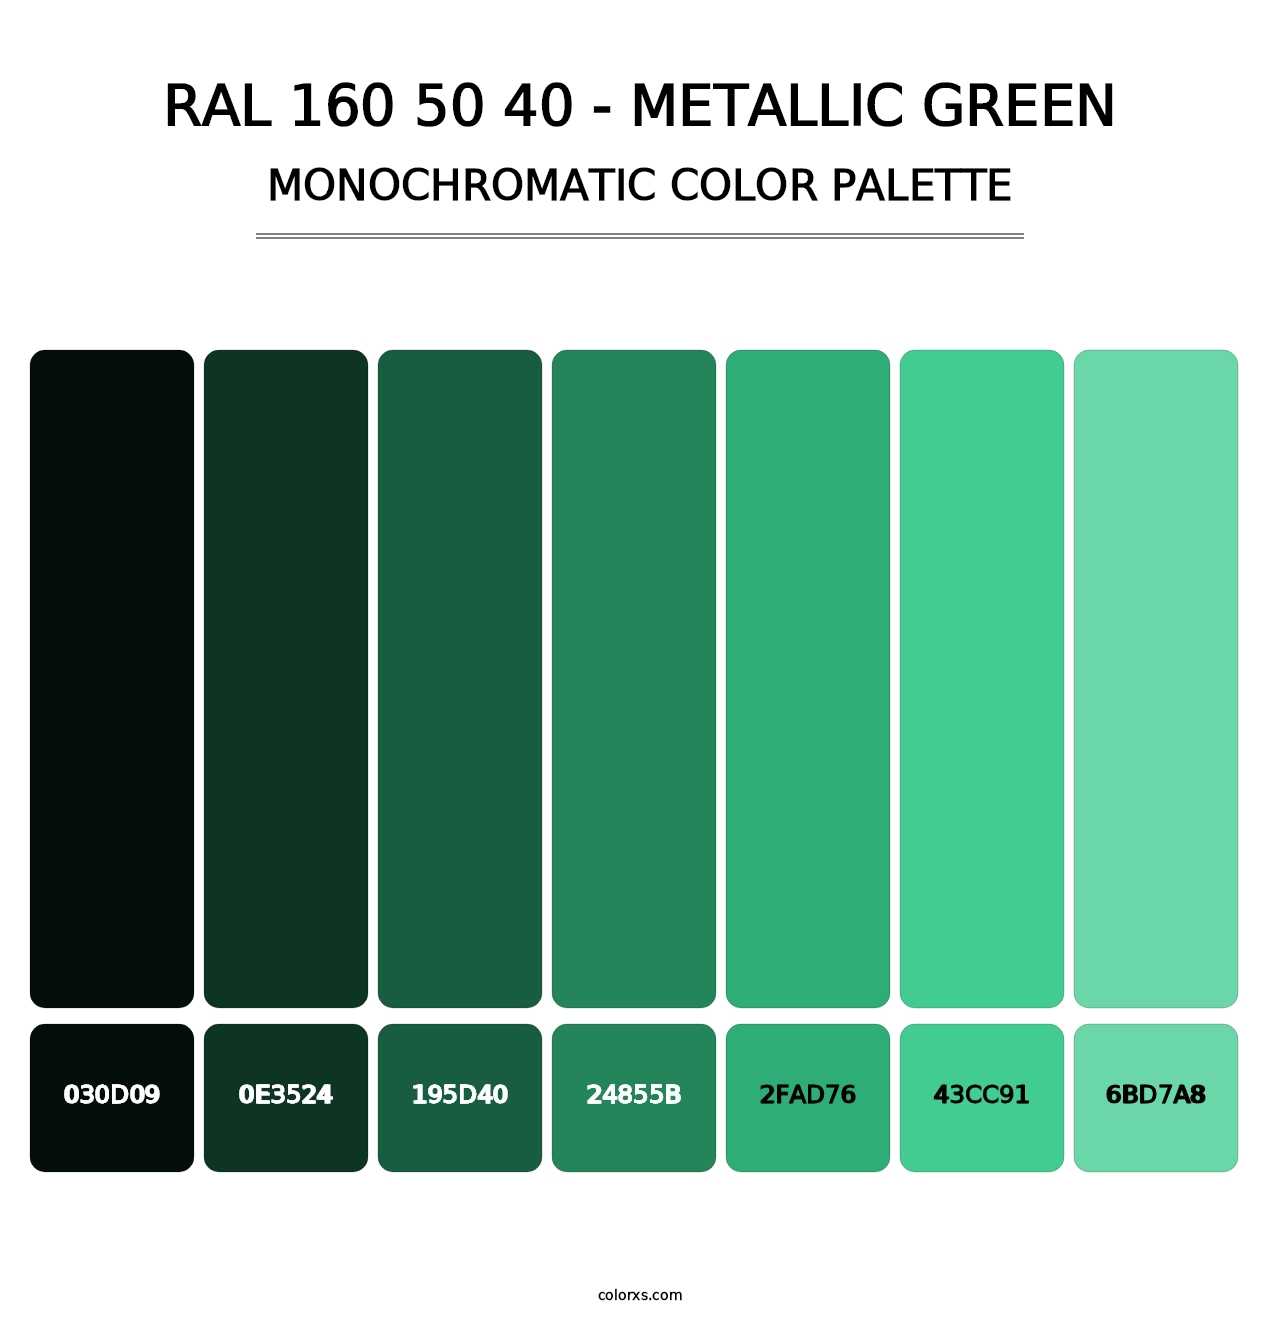 RAL 160 50 40 - Metallic Green - Monochromatic Color Palette